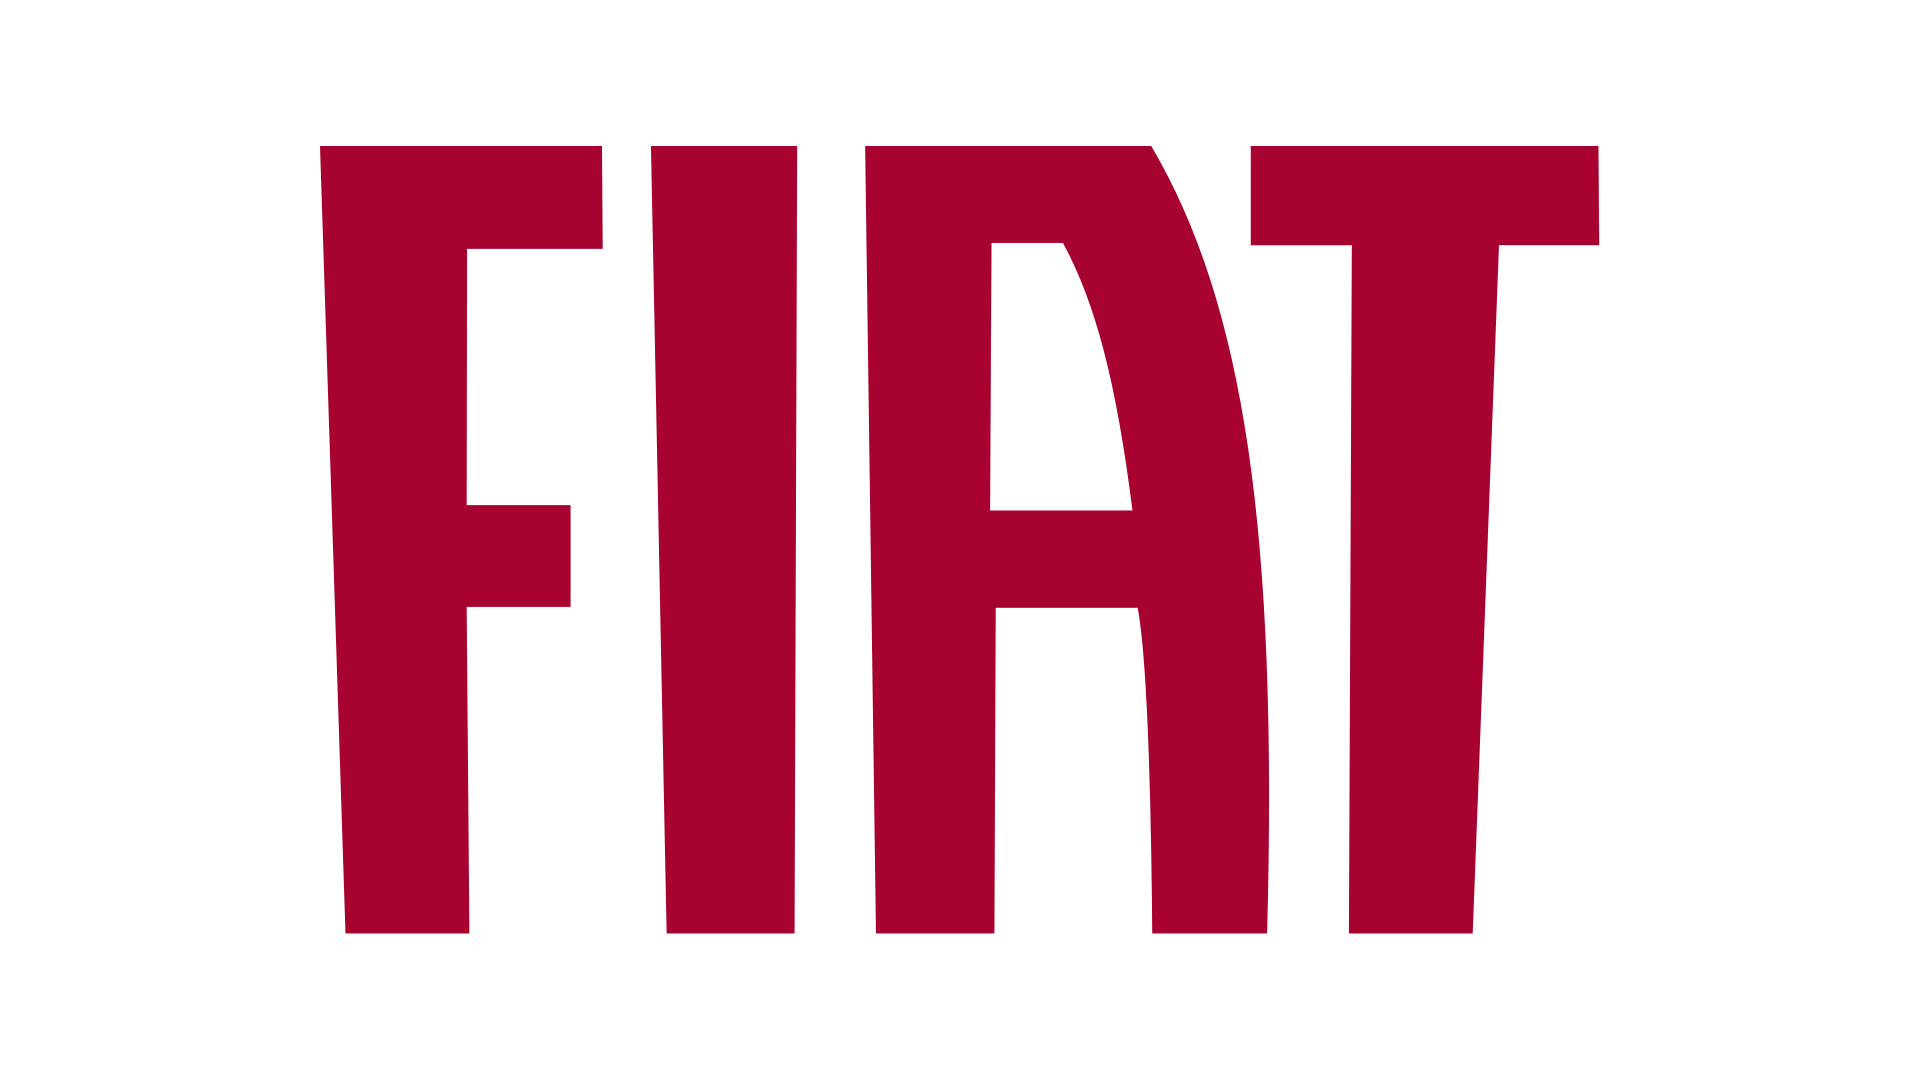 Fiat-text-logo-1920x1080.png